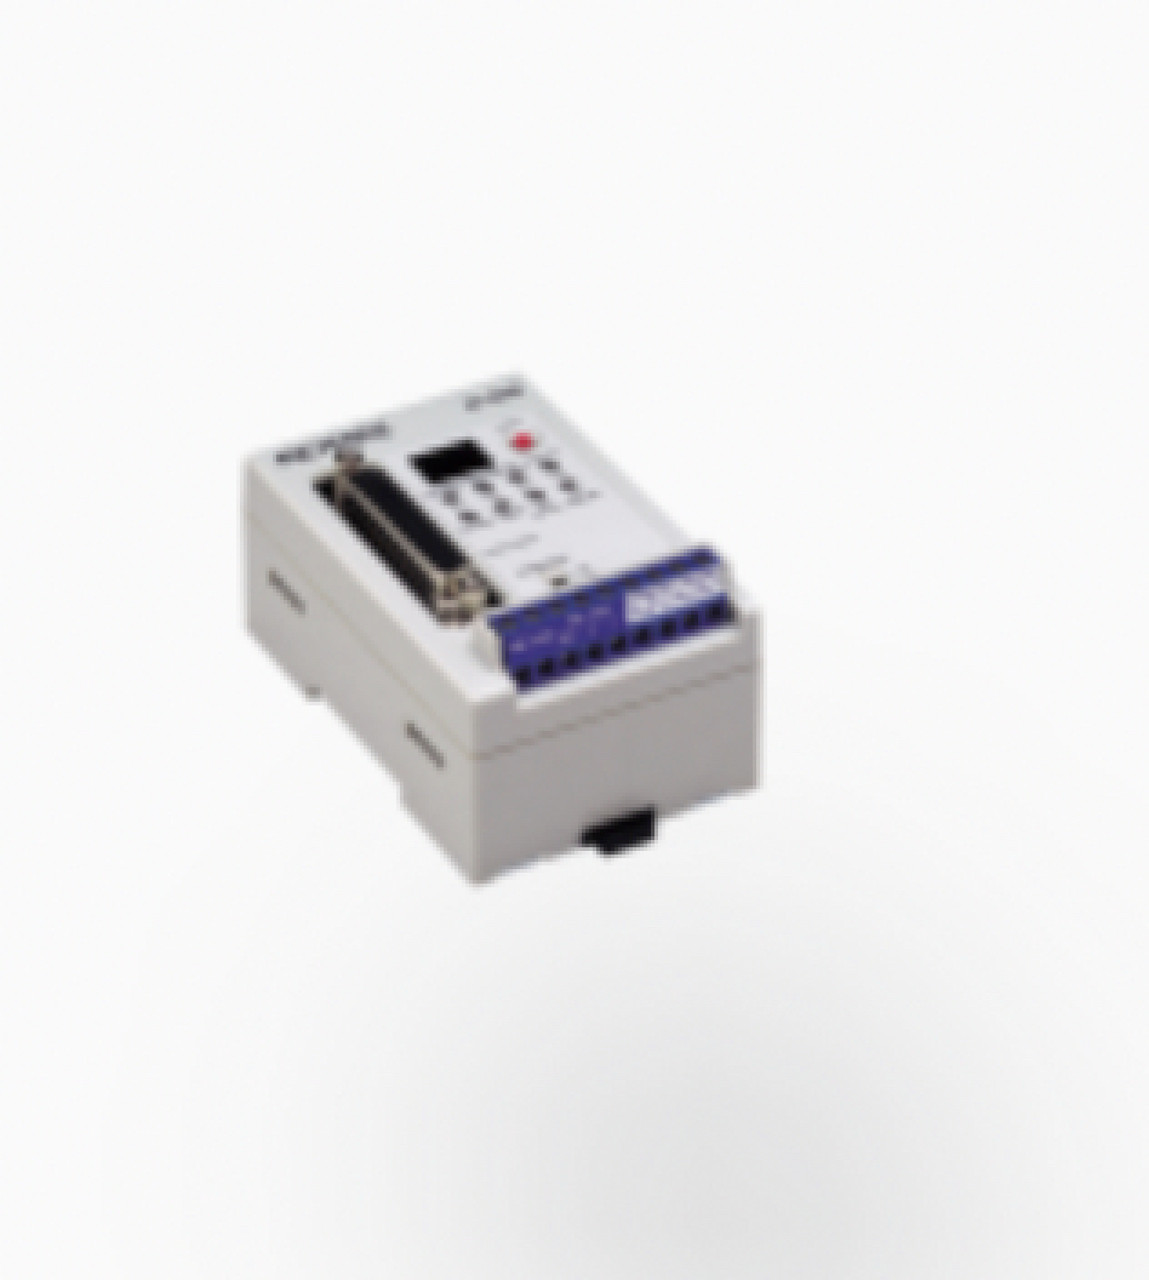 Keyence N-400 Barcode Scanners, Multi-Drop Controller for BL Series [Refurbished]